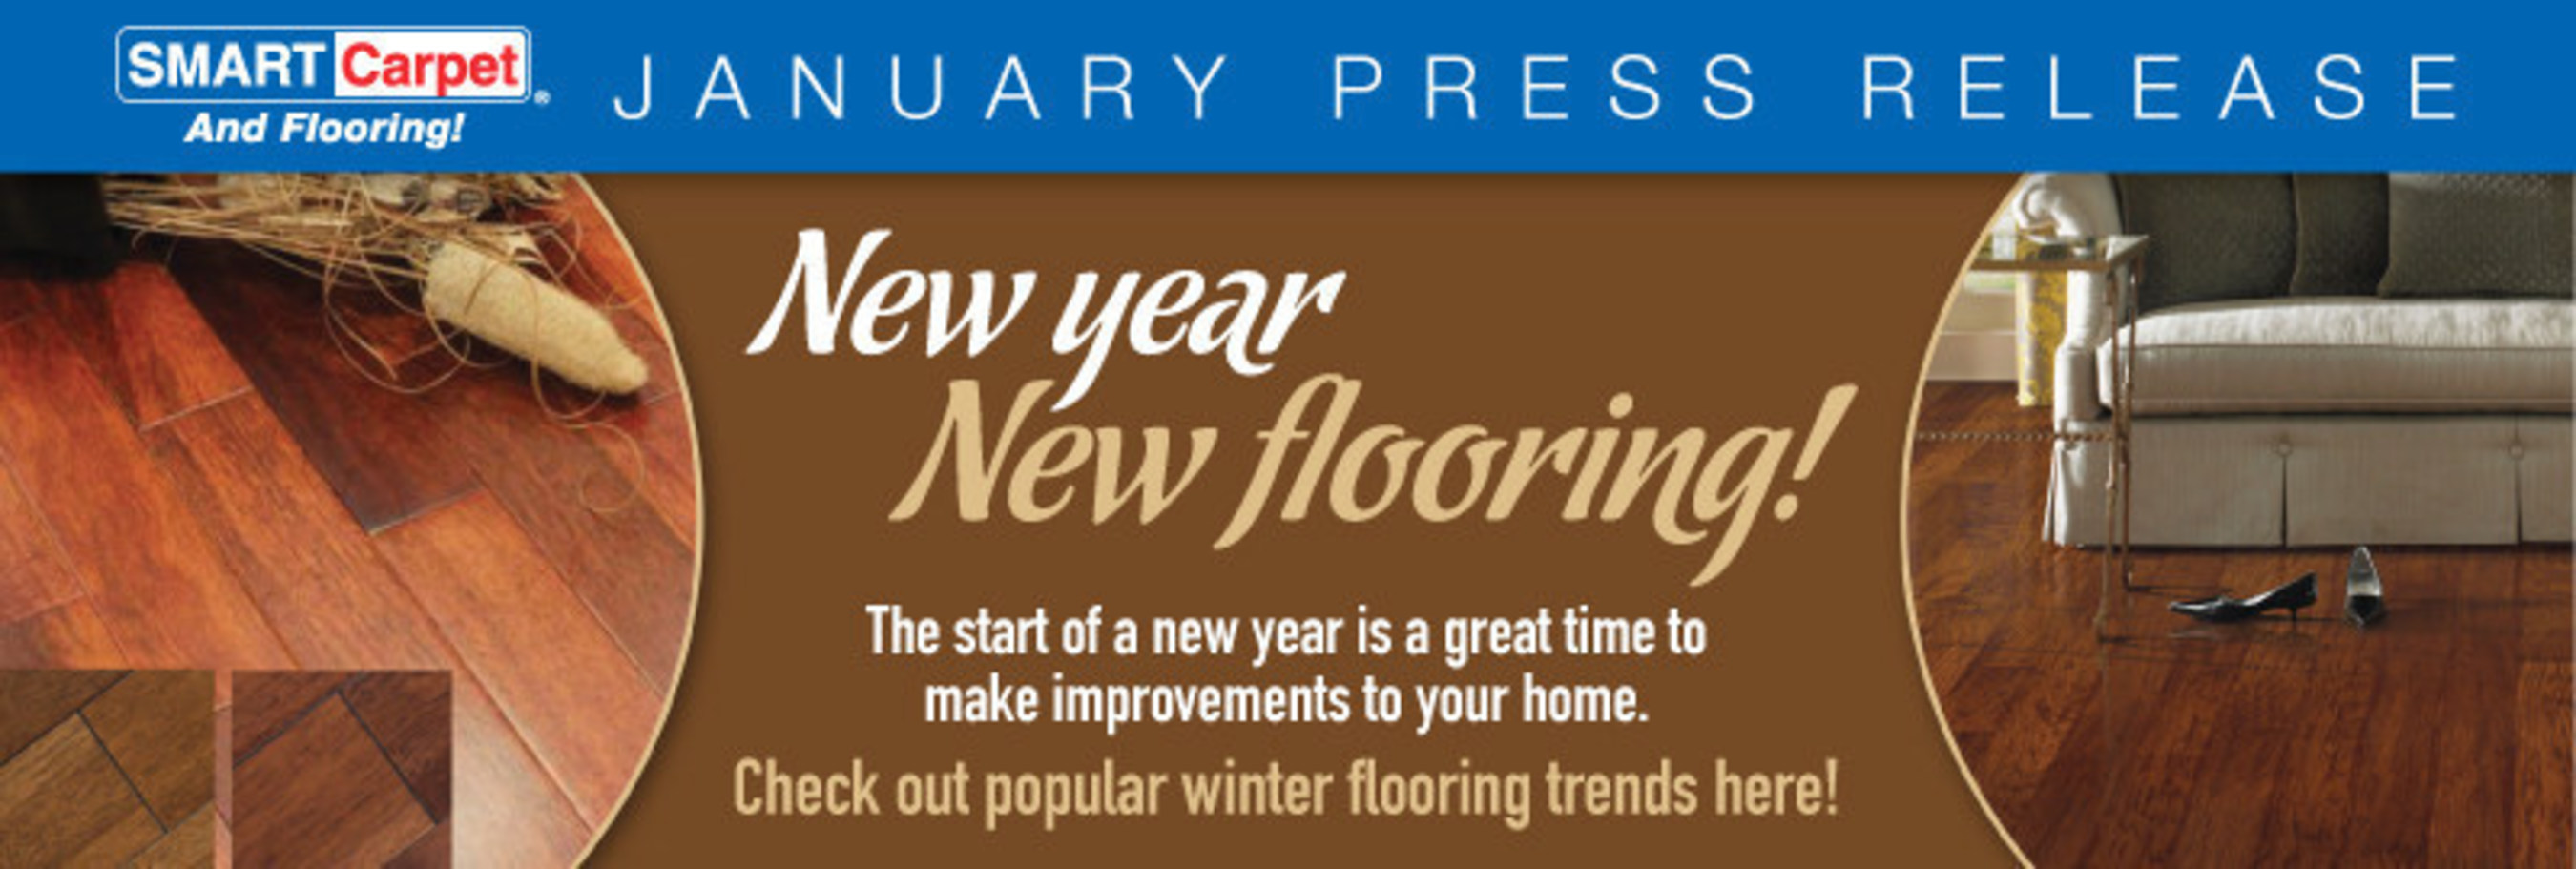 New Year, New Flooring!